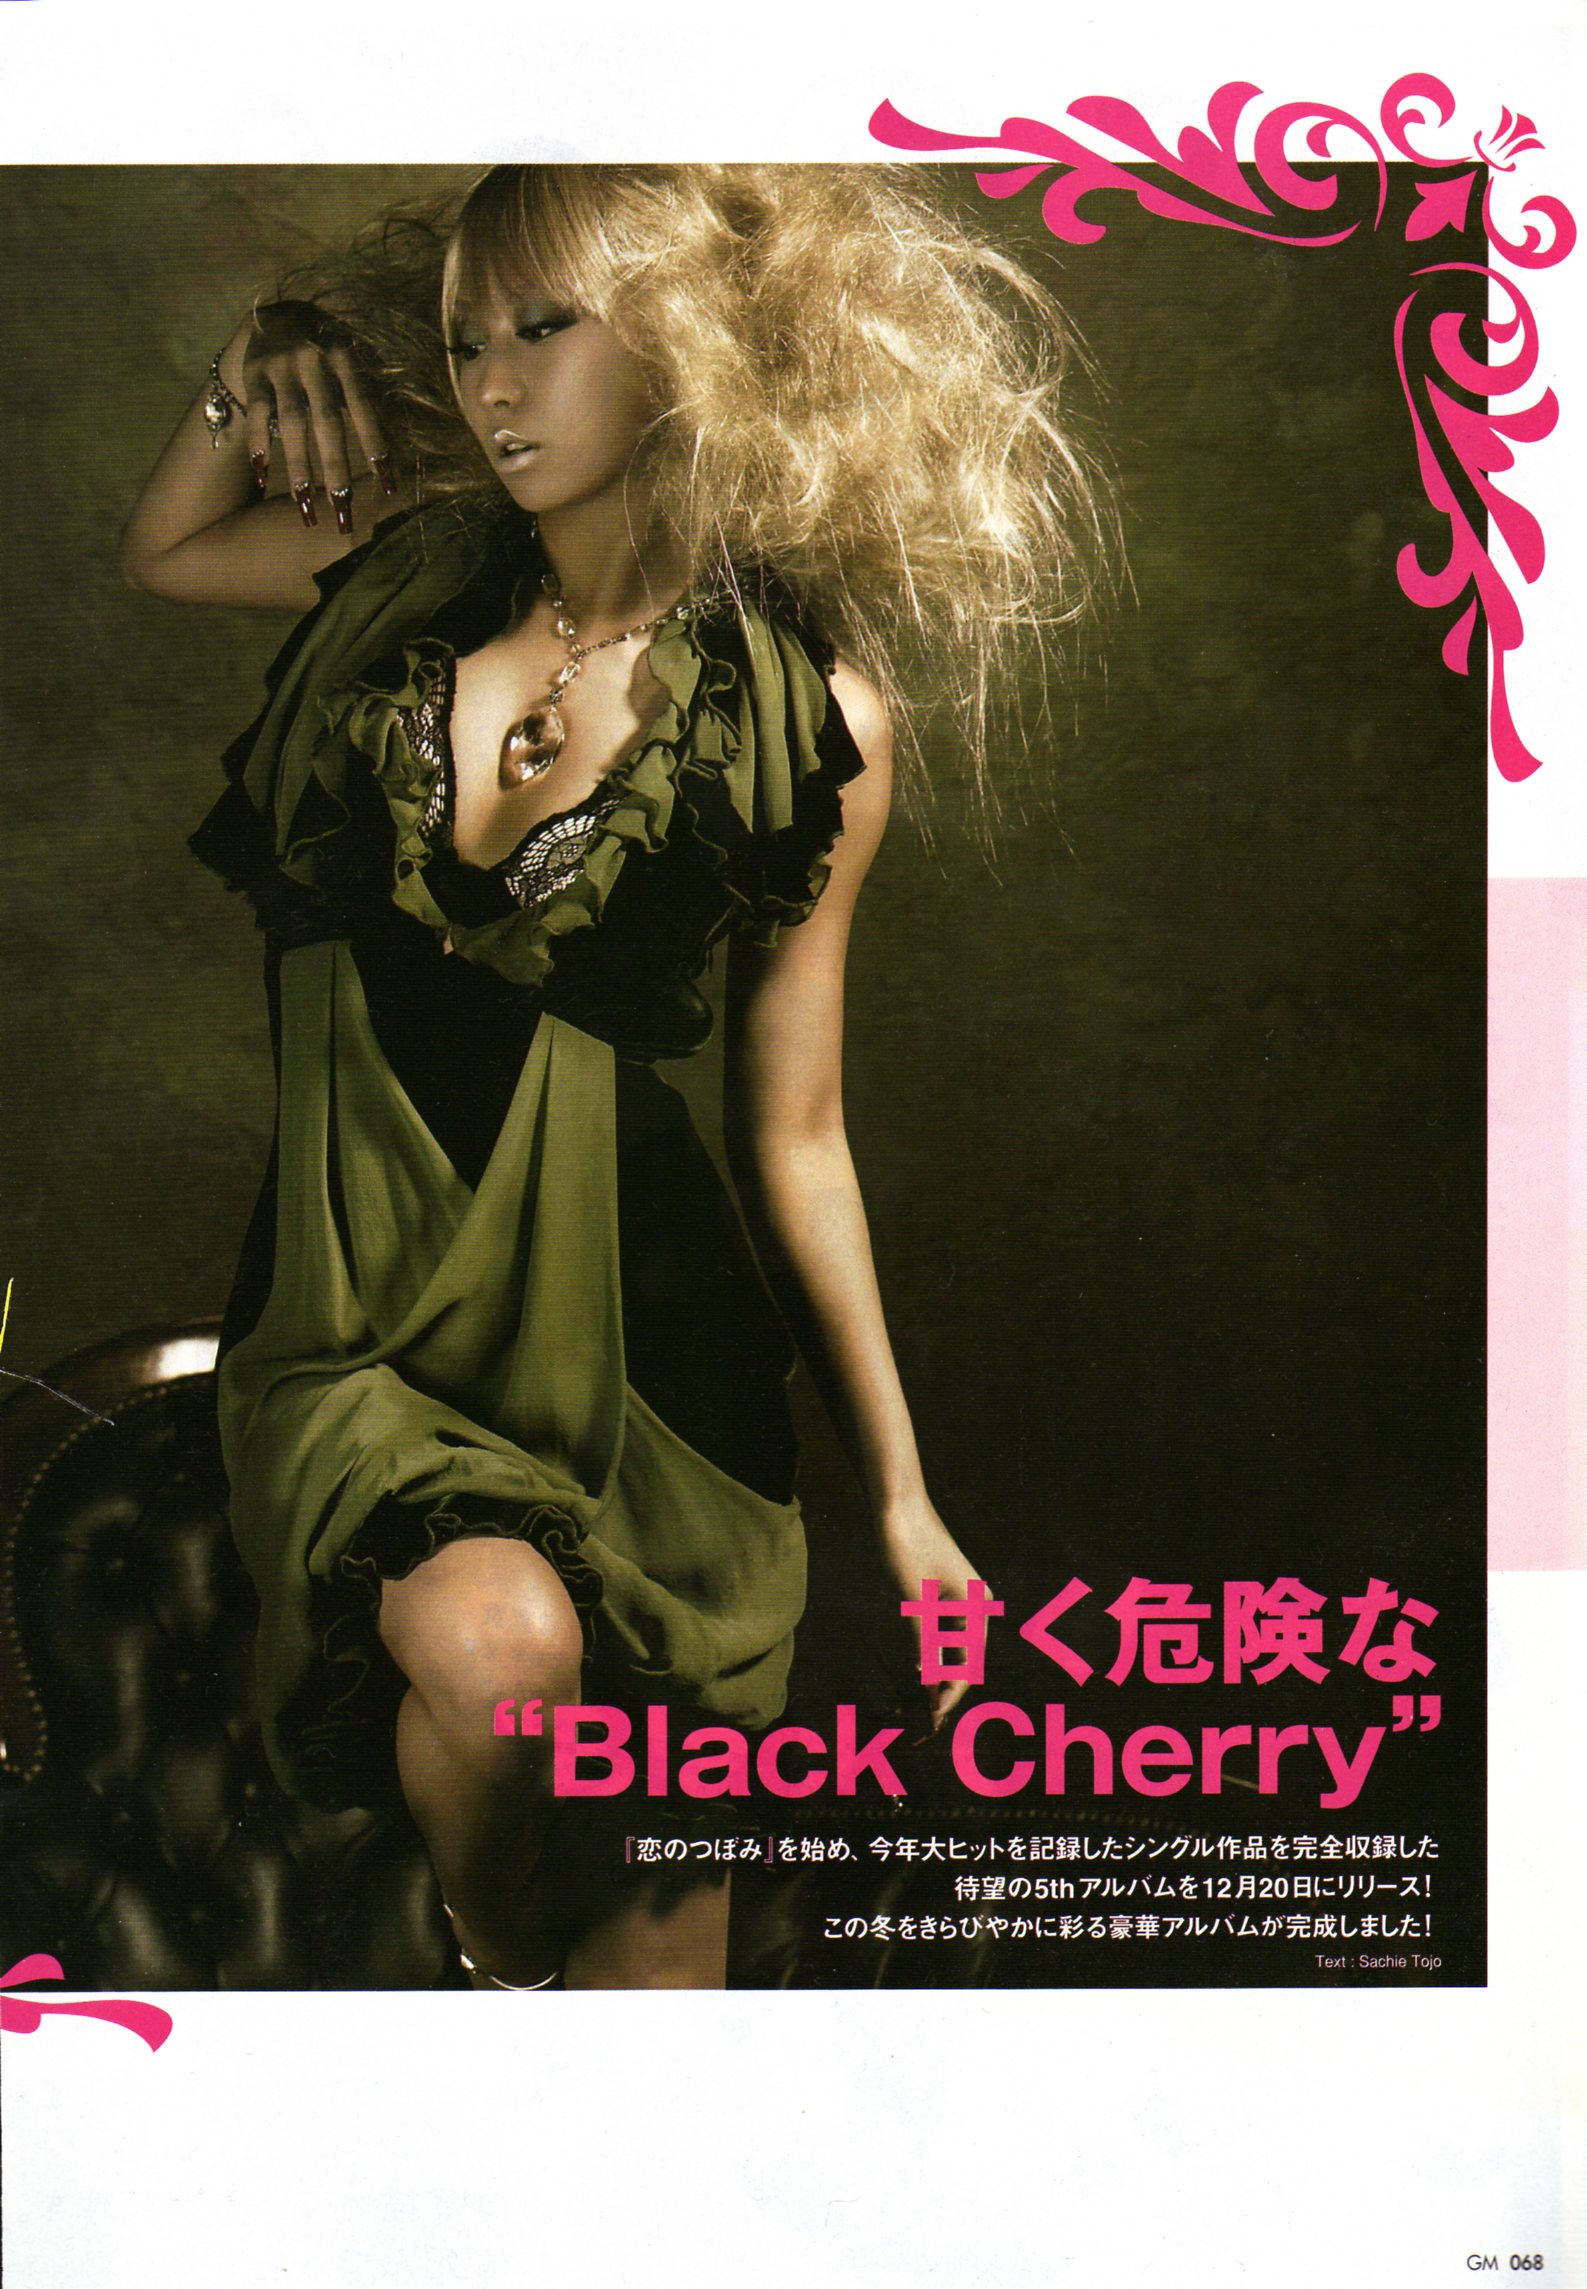 Gyao Magazine/2007-01